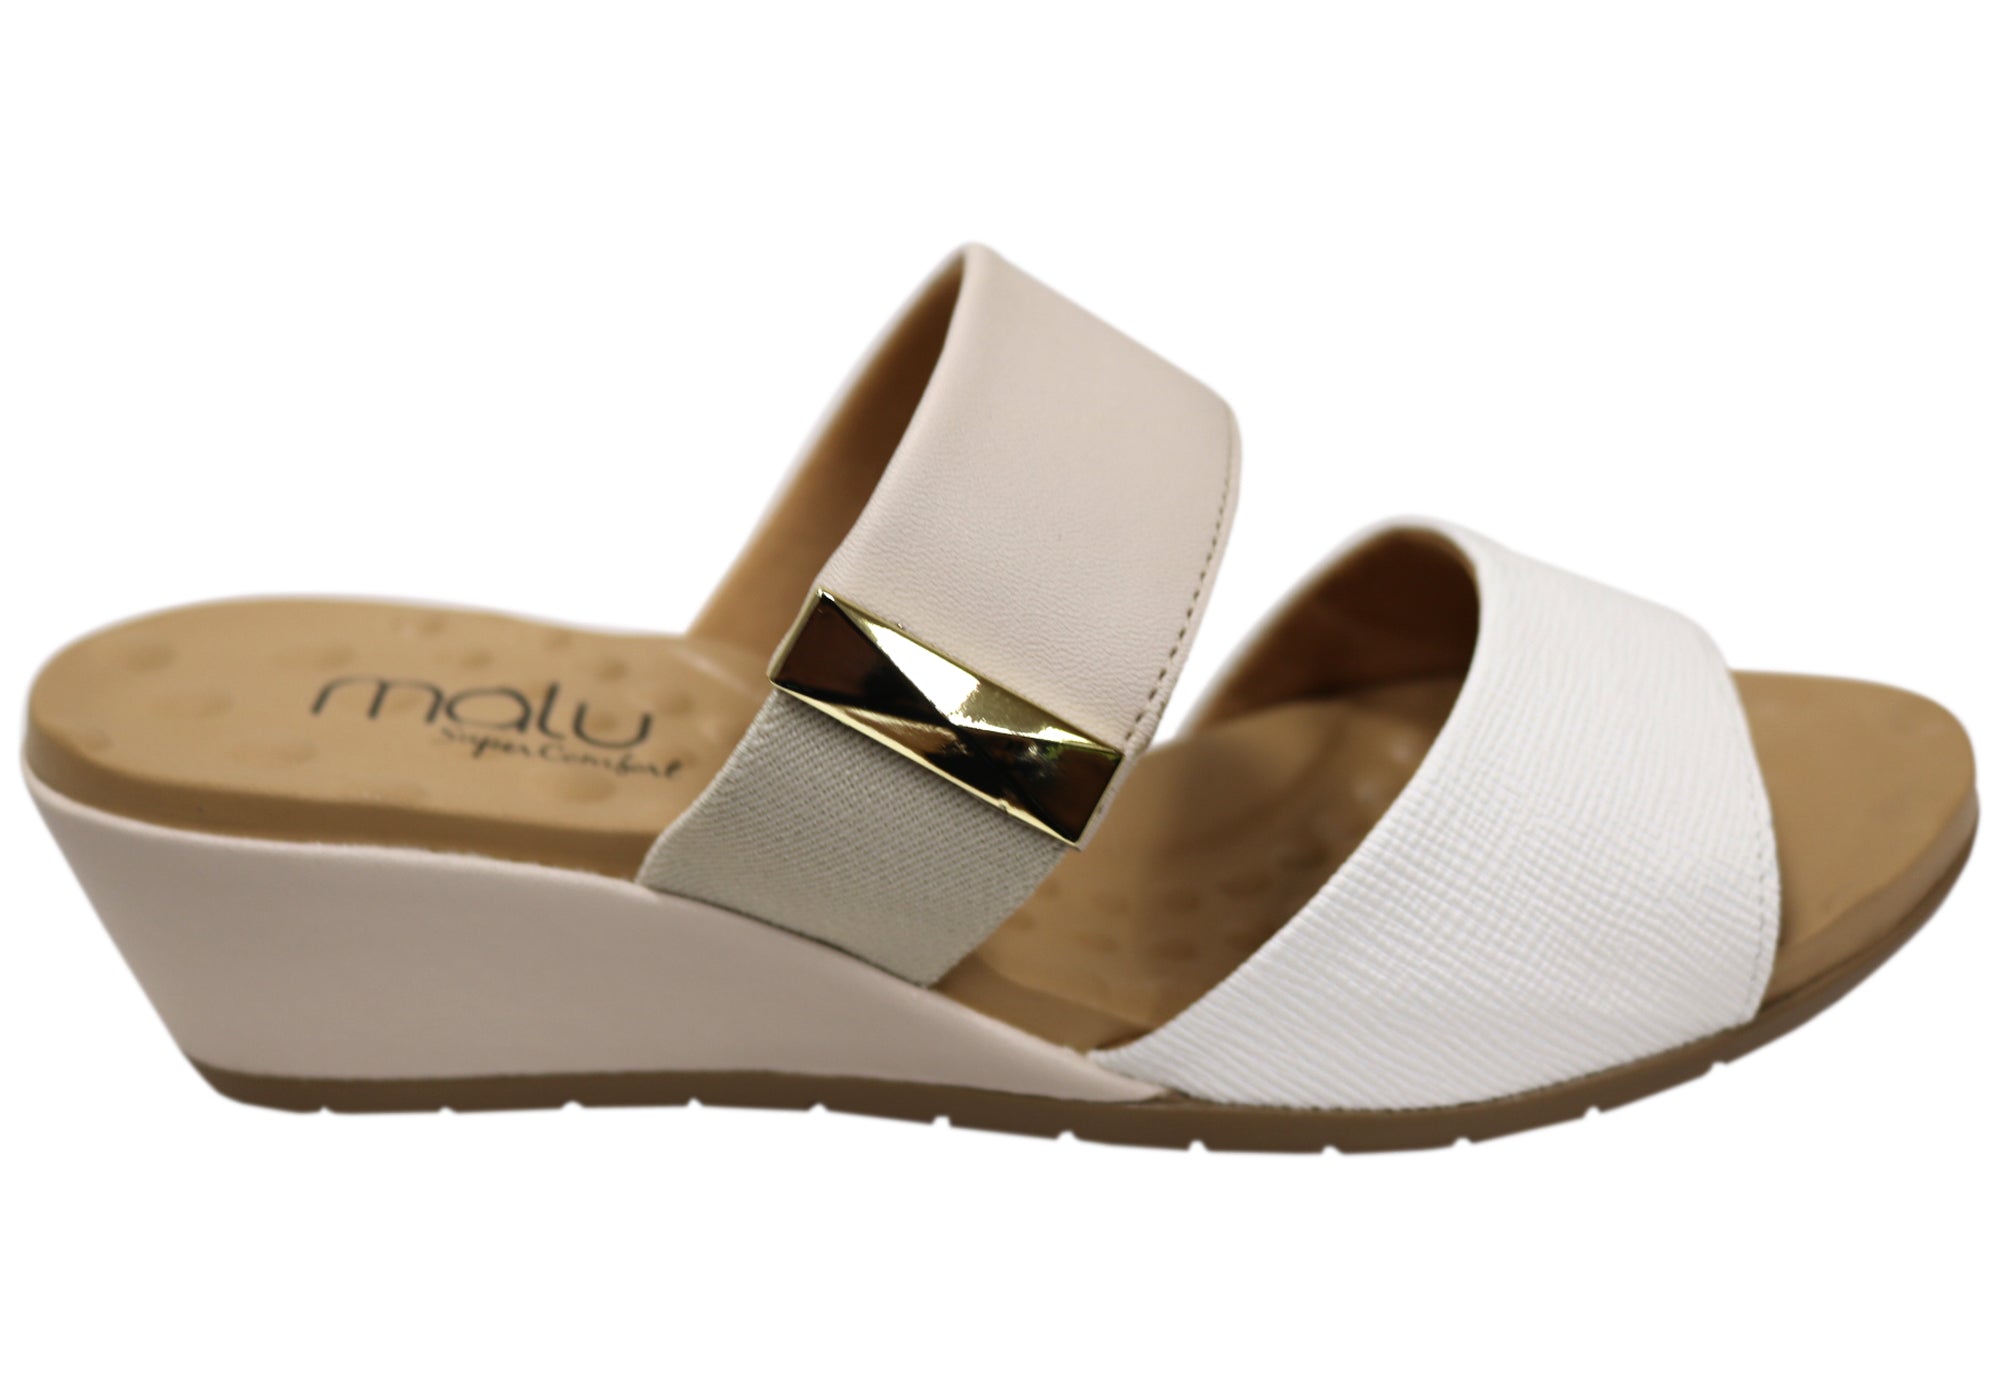 Malu Super Comfort Wedge Sandals - Sandal Design